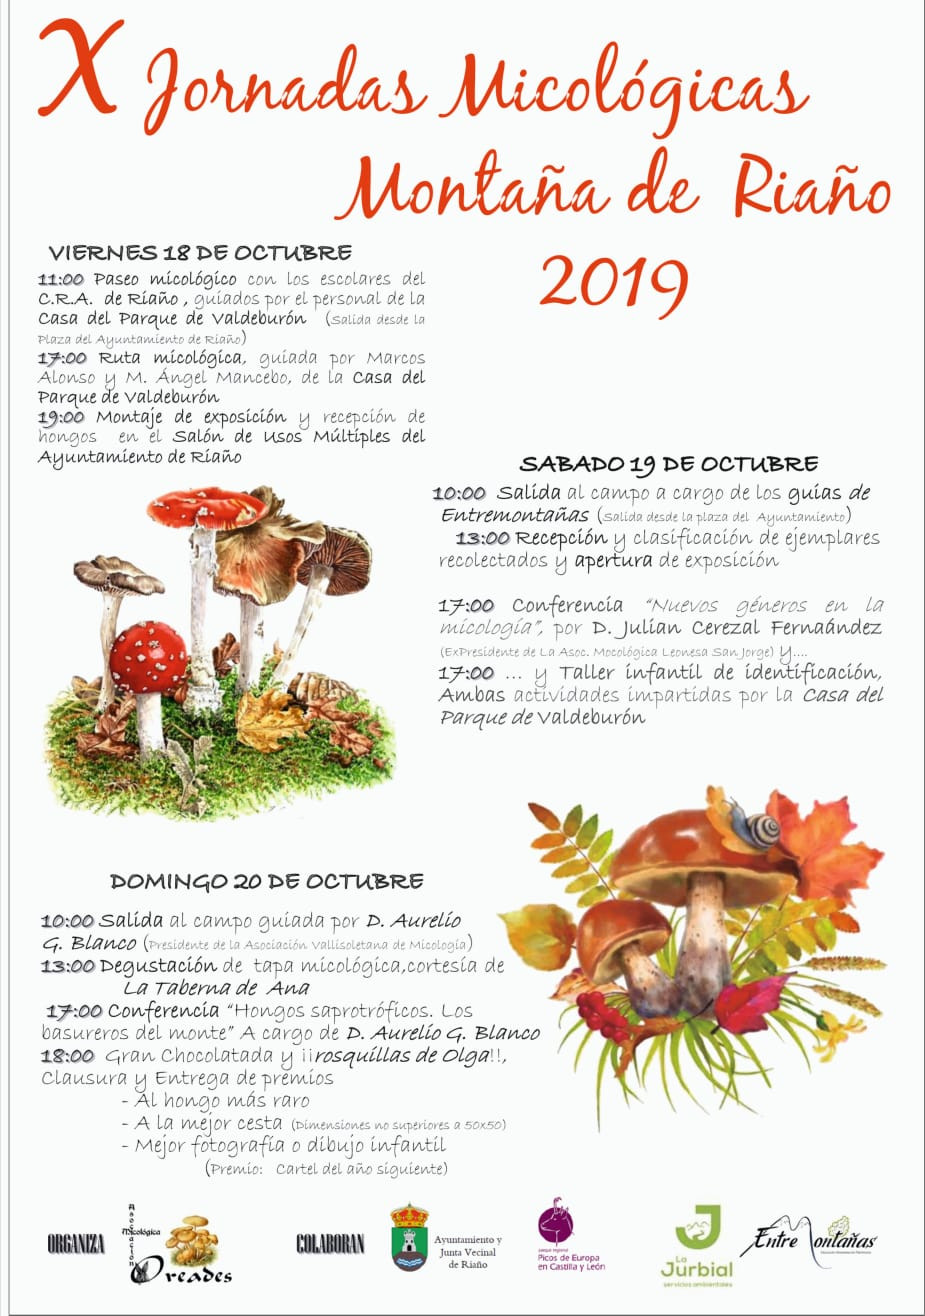 Jornadas micologicas riau00f1o 2019